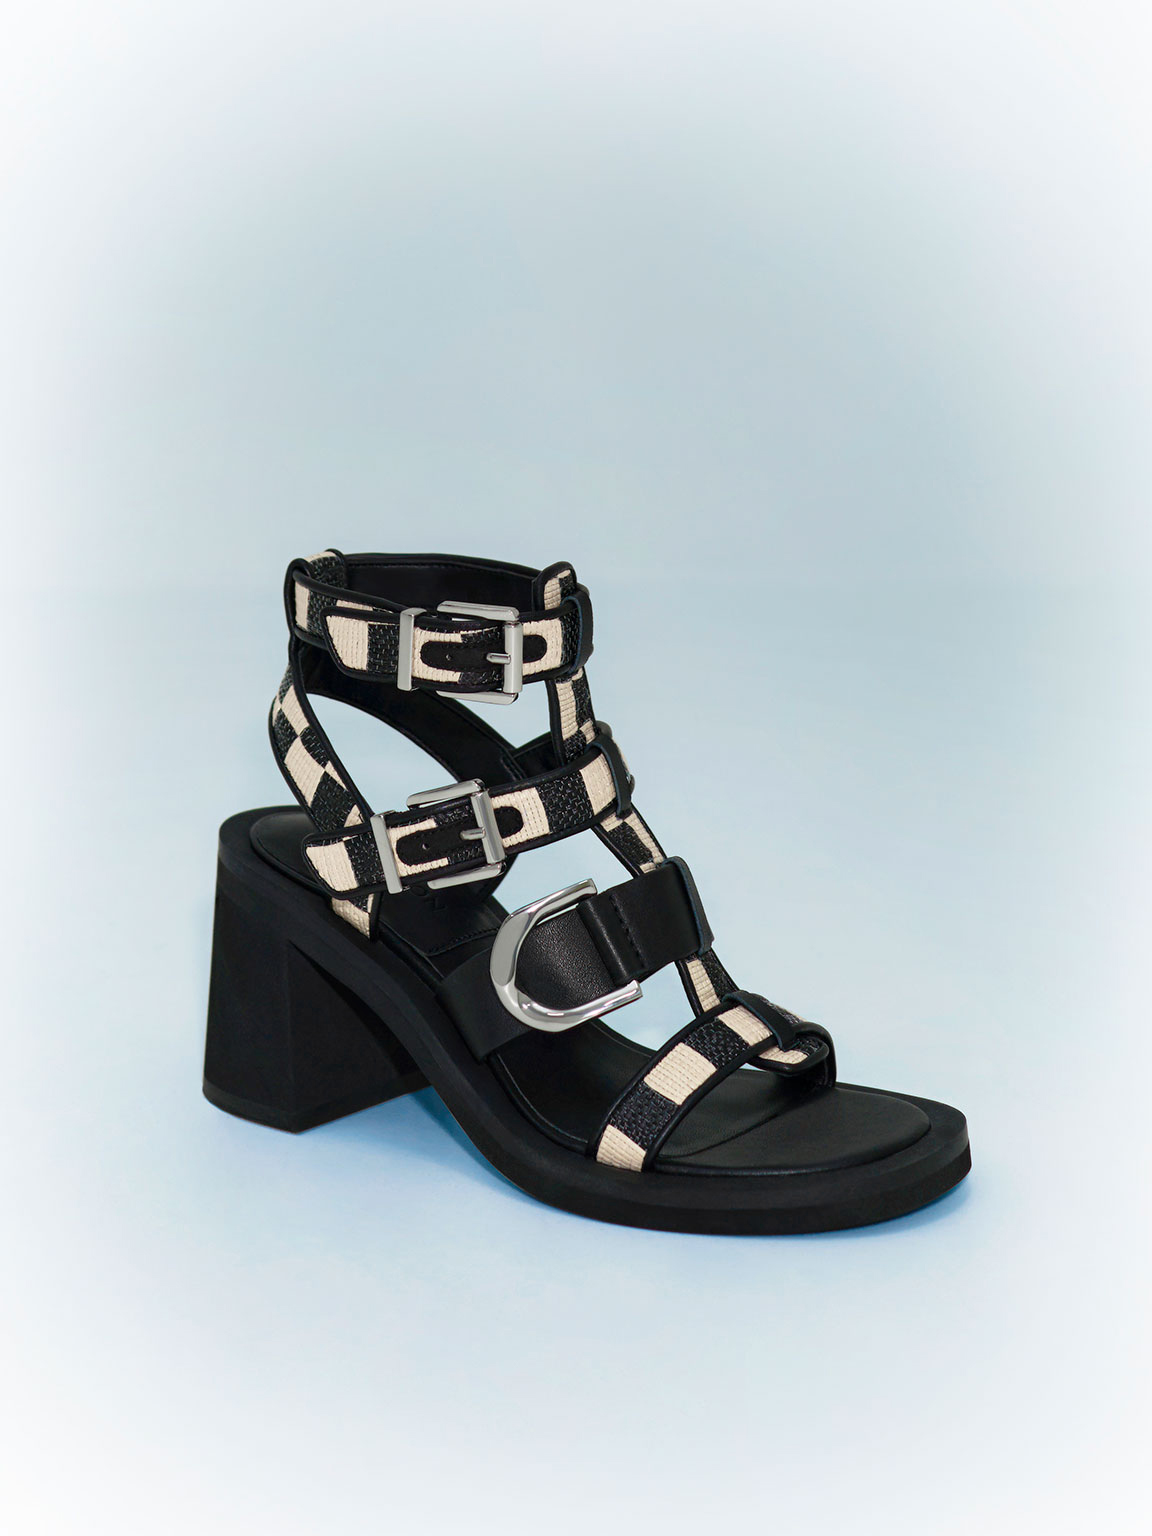 Missguided Studded Heeled Gladiator Sandals Black | Gladiator sandals,  Black gladiator sandals, Sandals